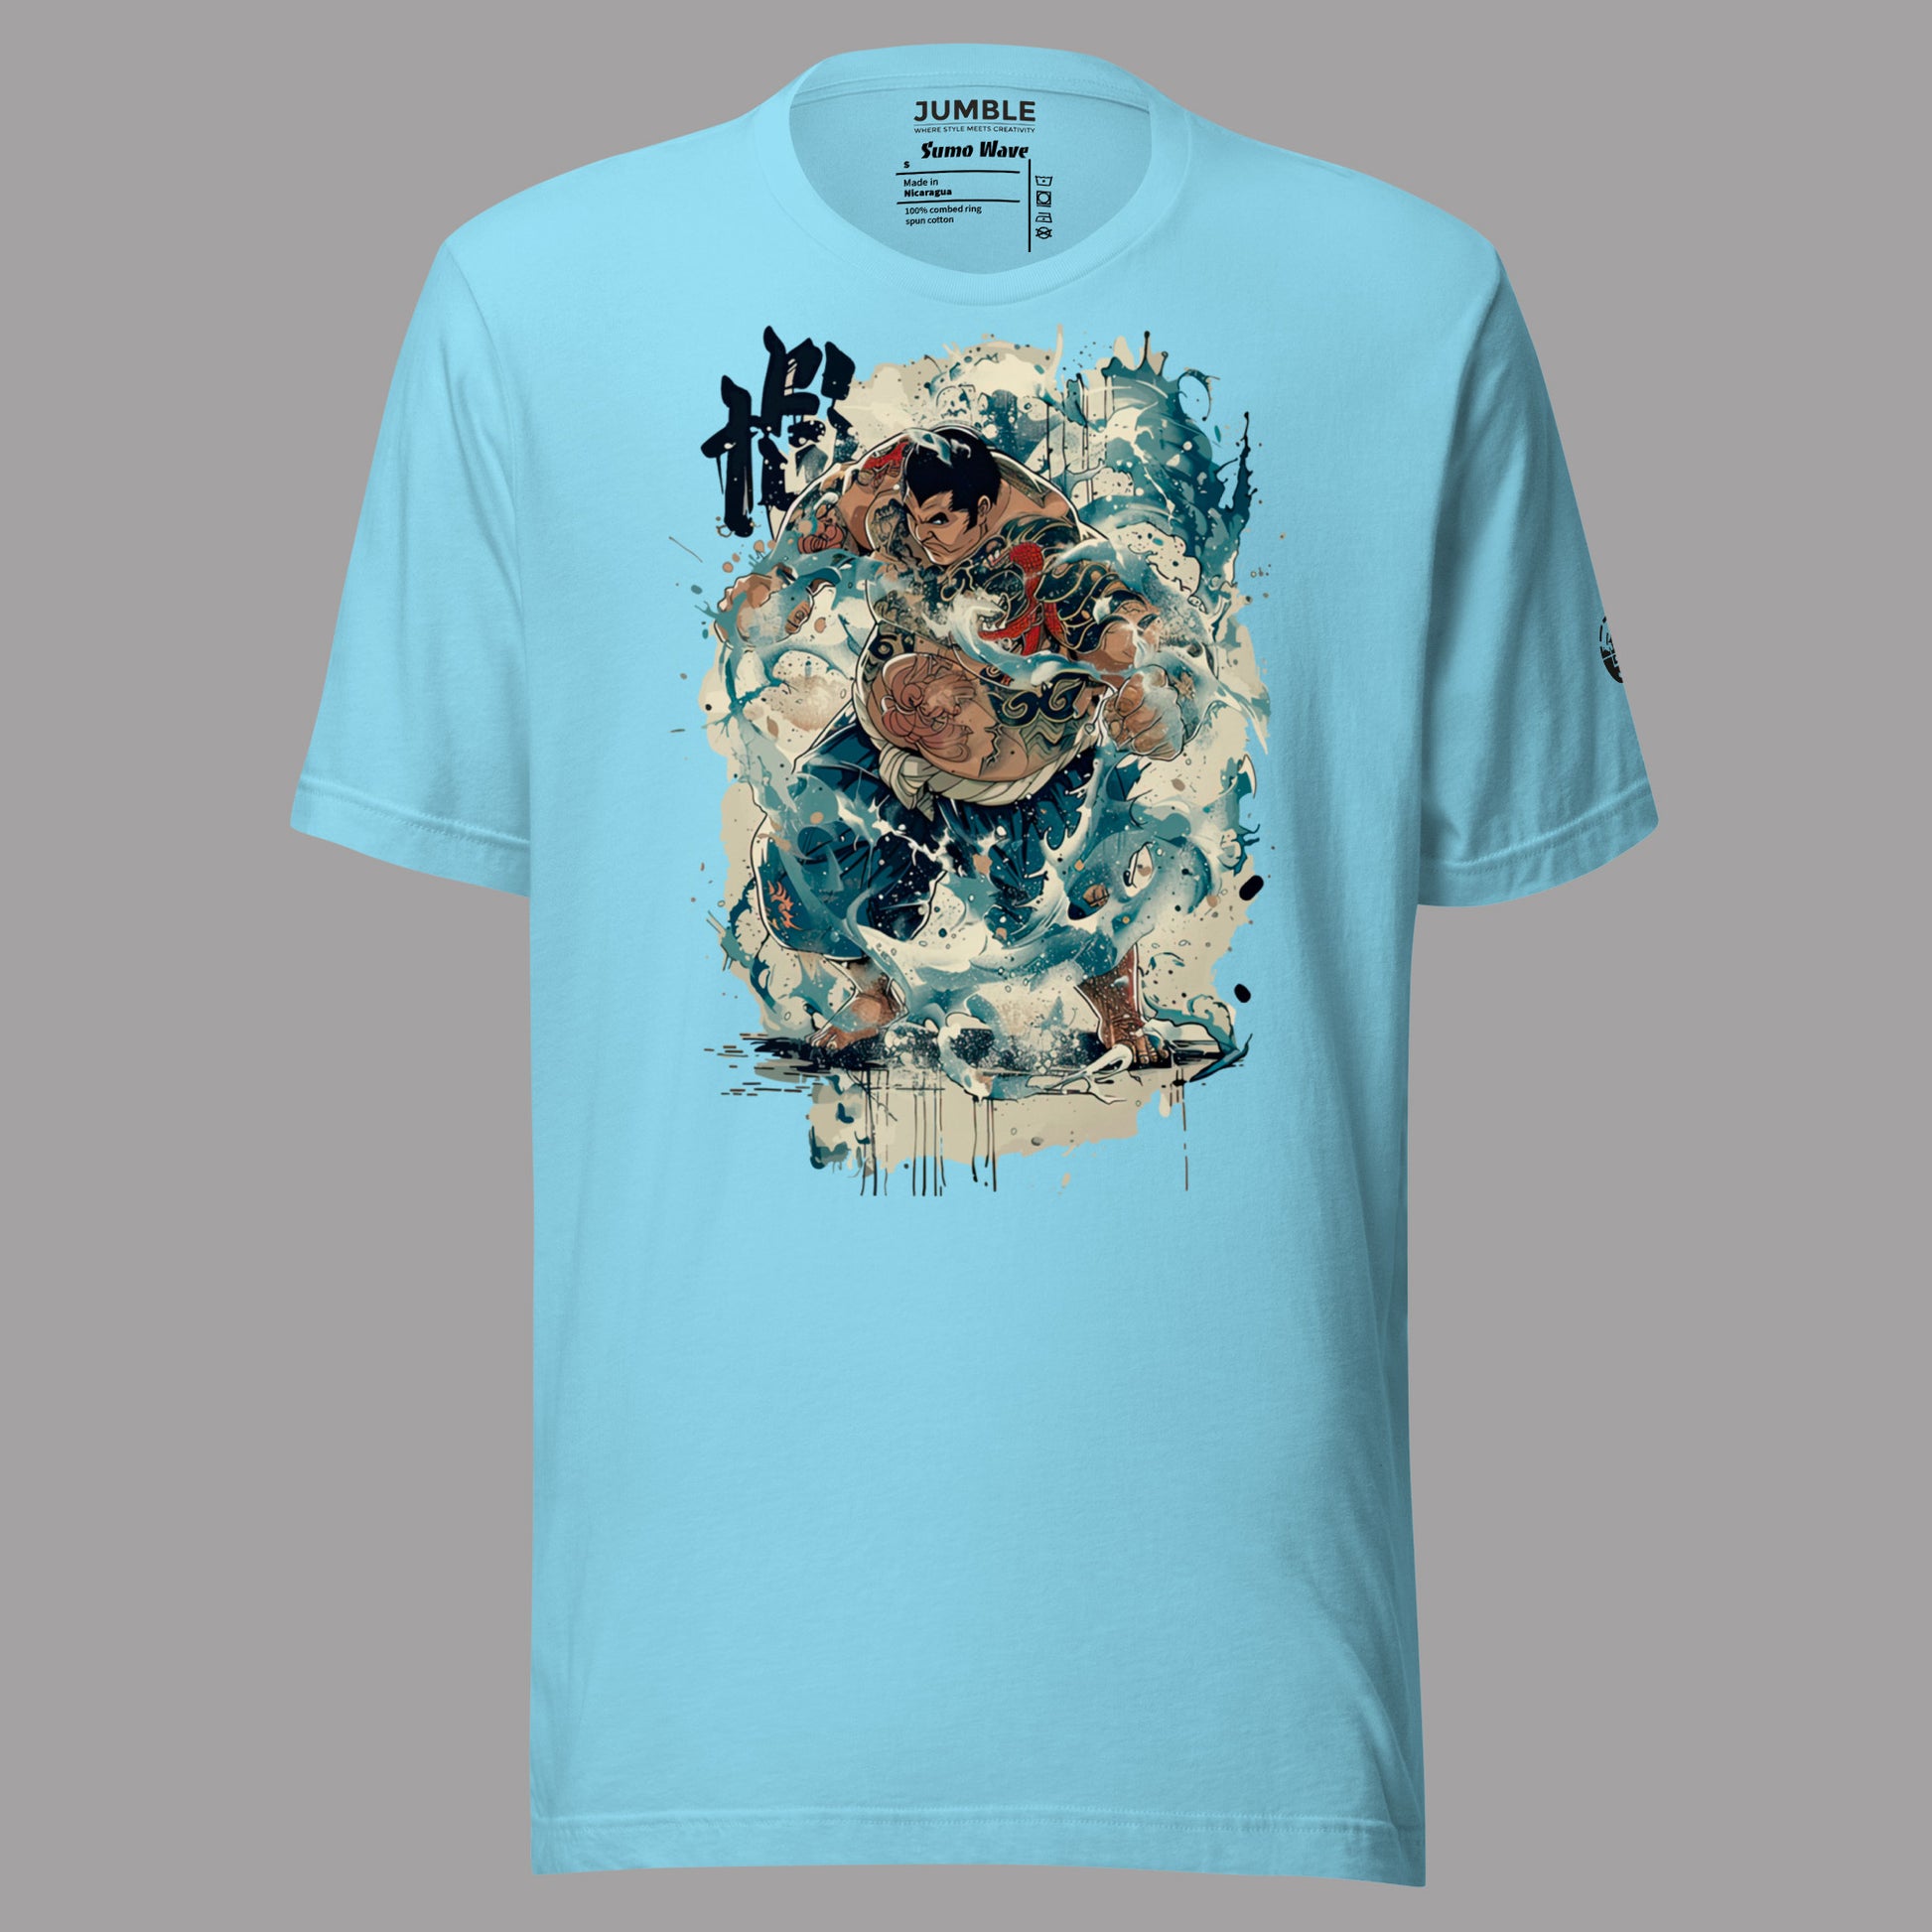 Sumo Wave Unisex t-shirt in ocean blue